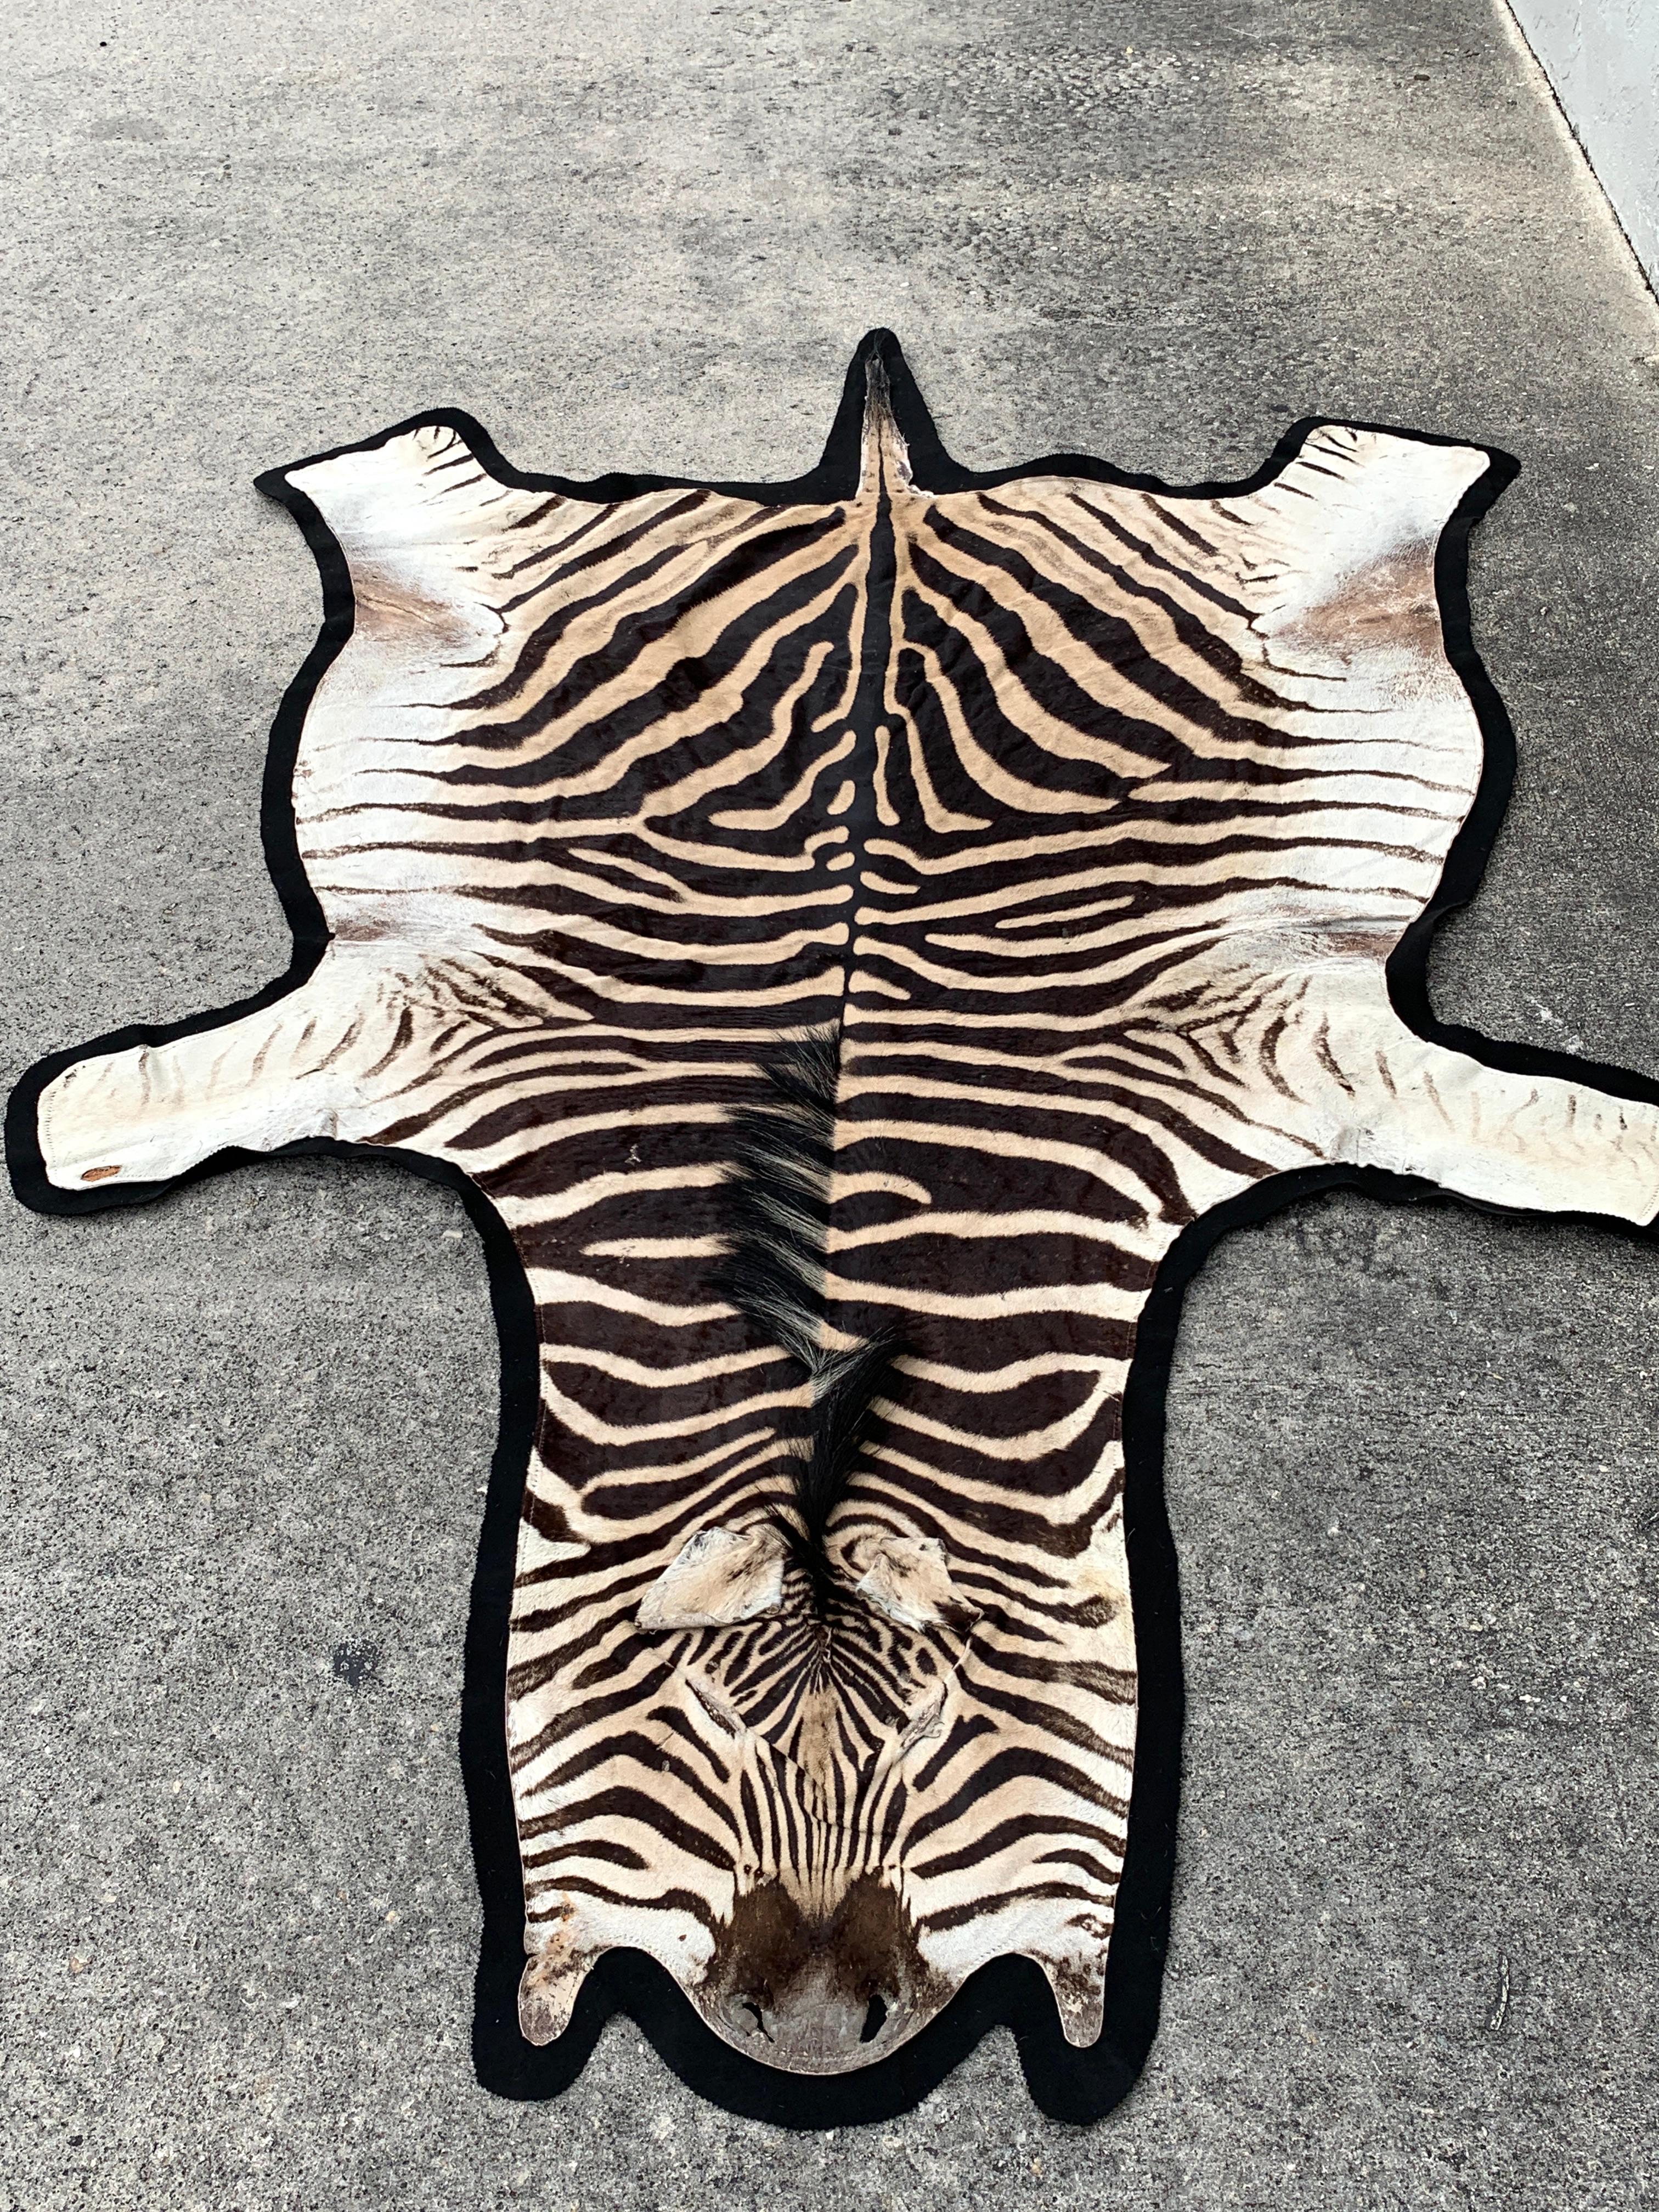 Animal Skin Vintage Zebra Hide Rug, Newly Backed